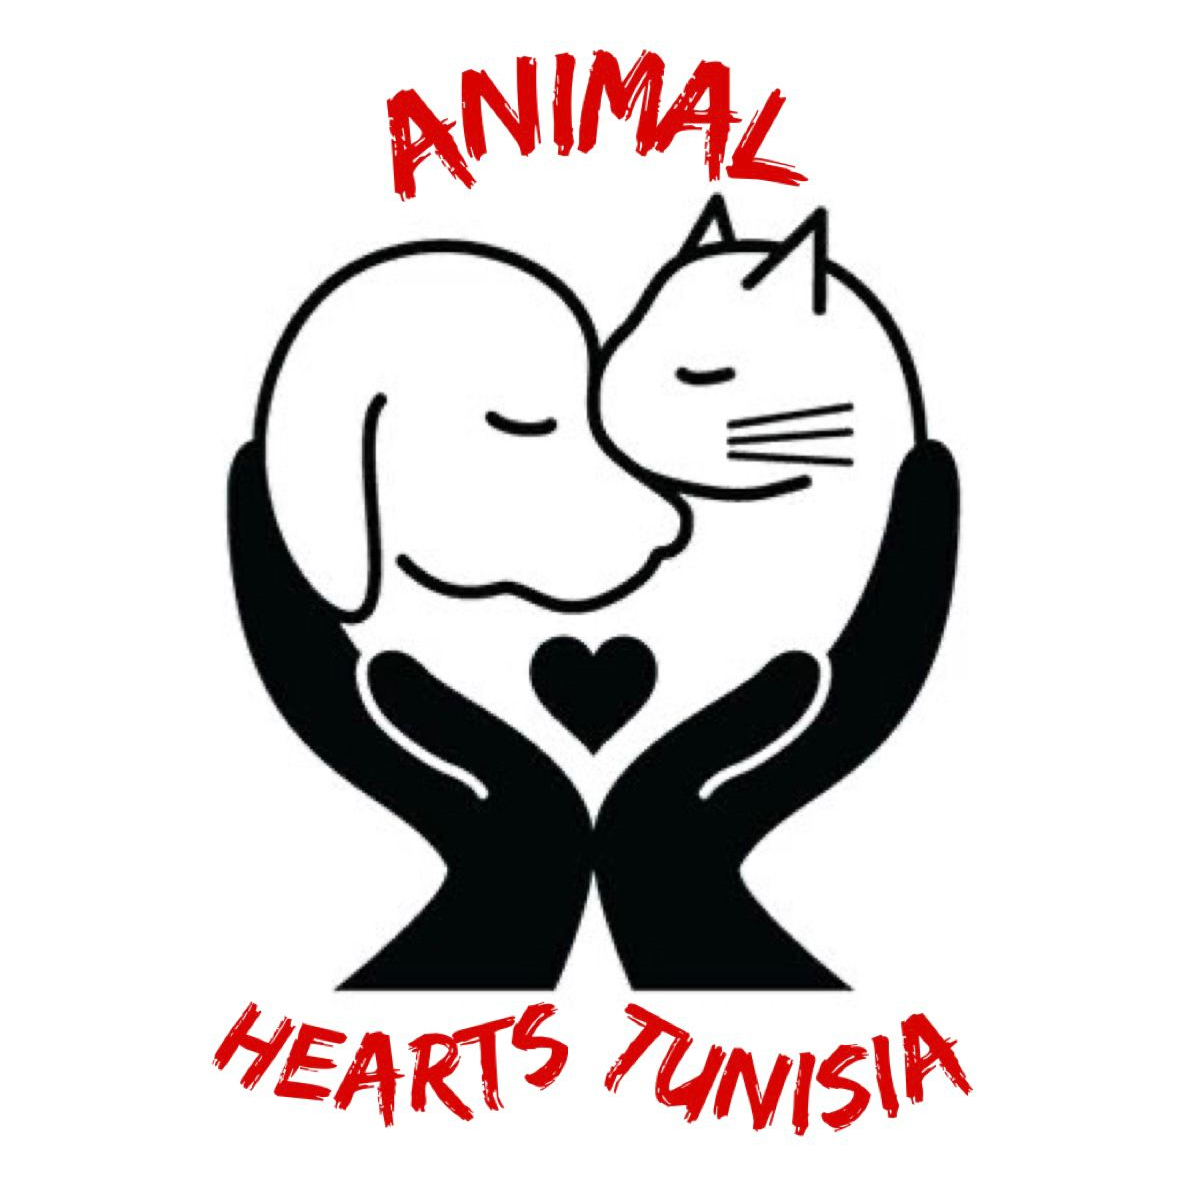 Animal Hearts Tunisia